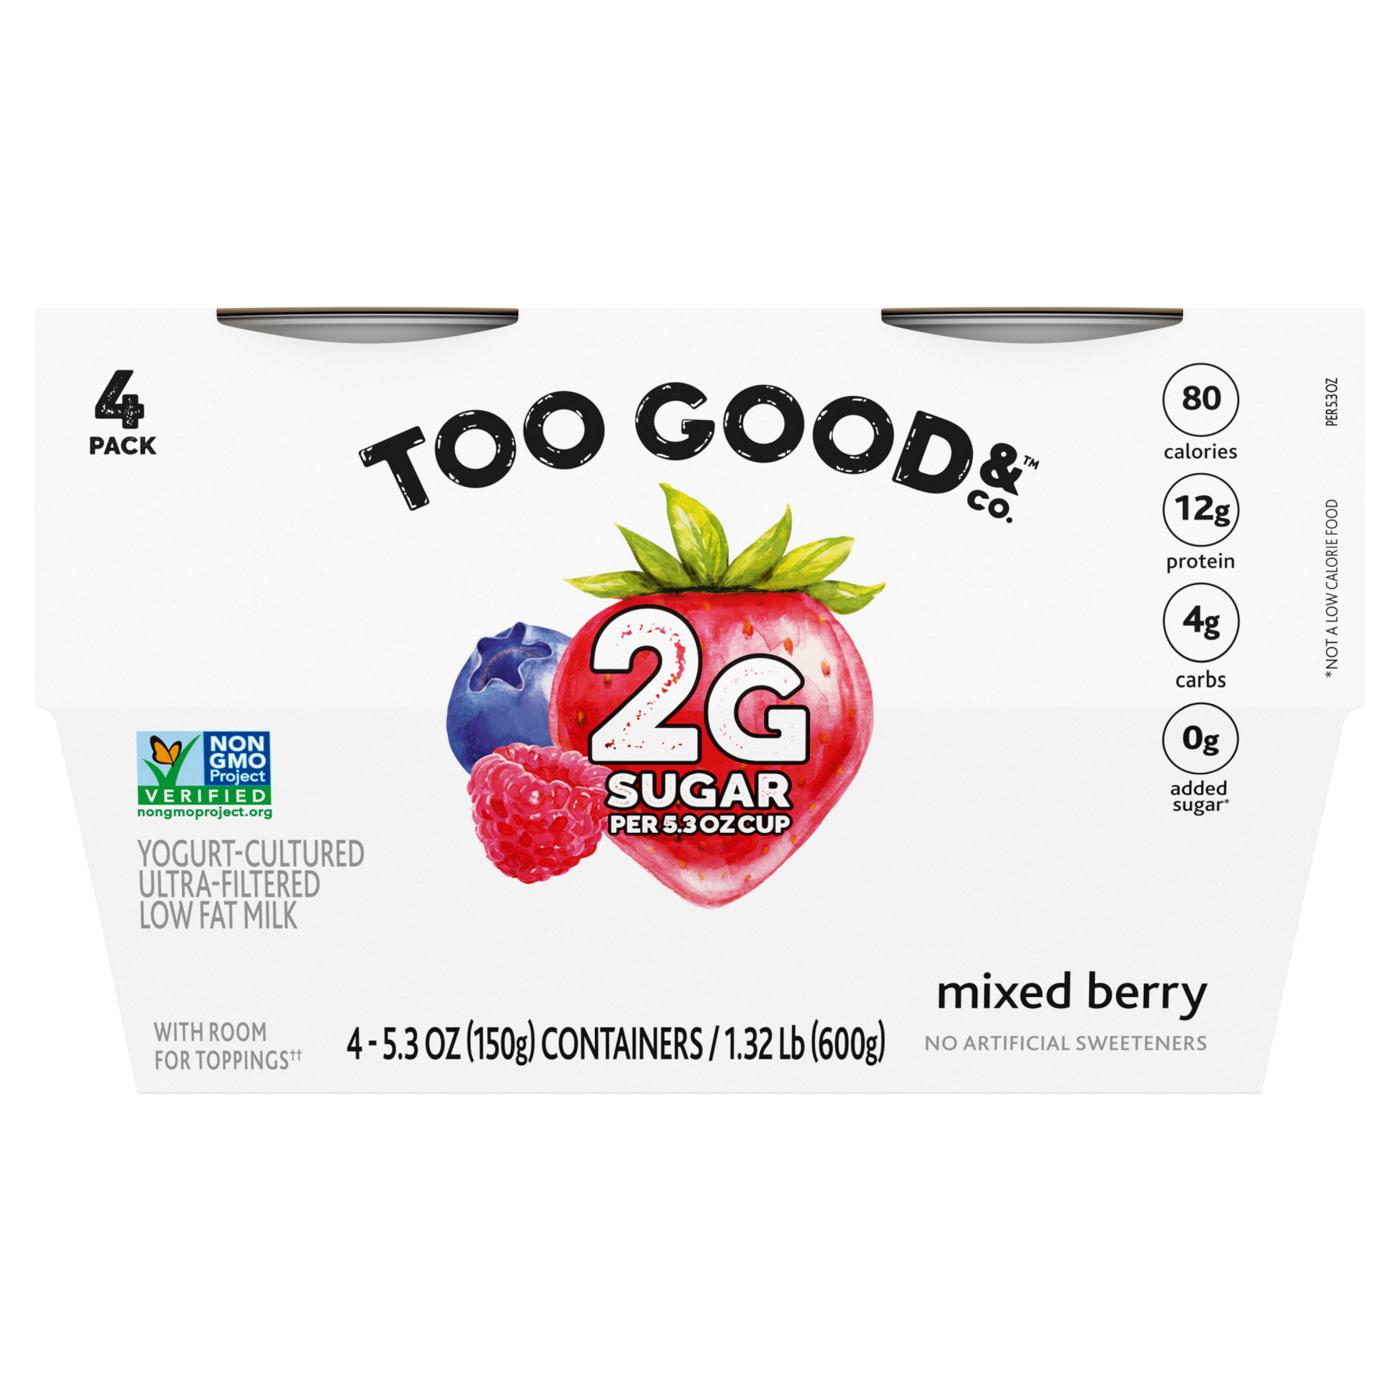 Too Good & Co. Mixed Berry Flavored Lower Sugar Greek Yogurt; image 1 of 2